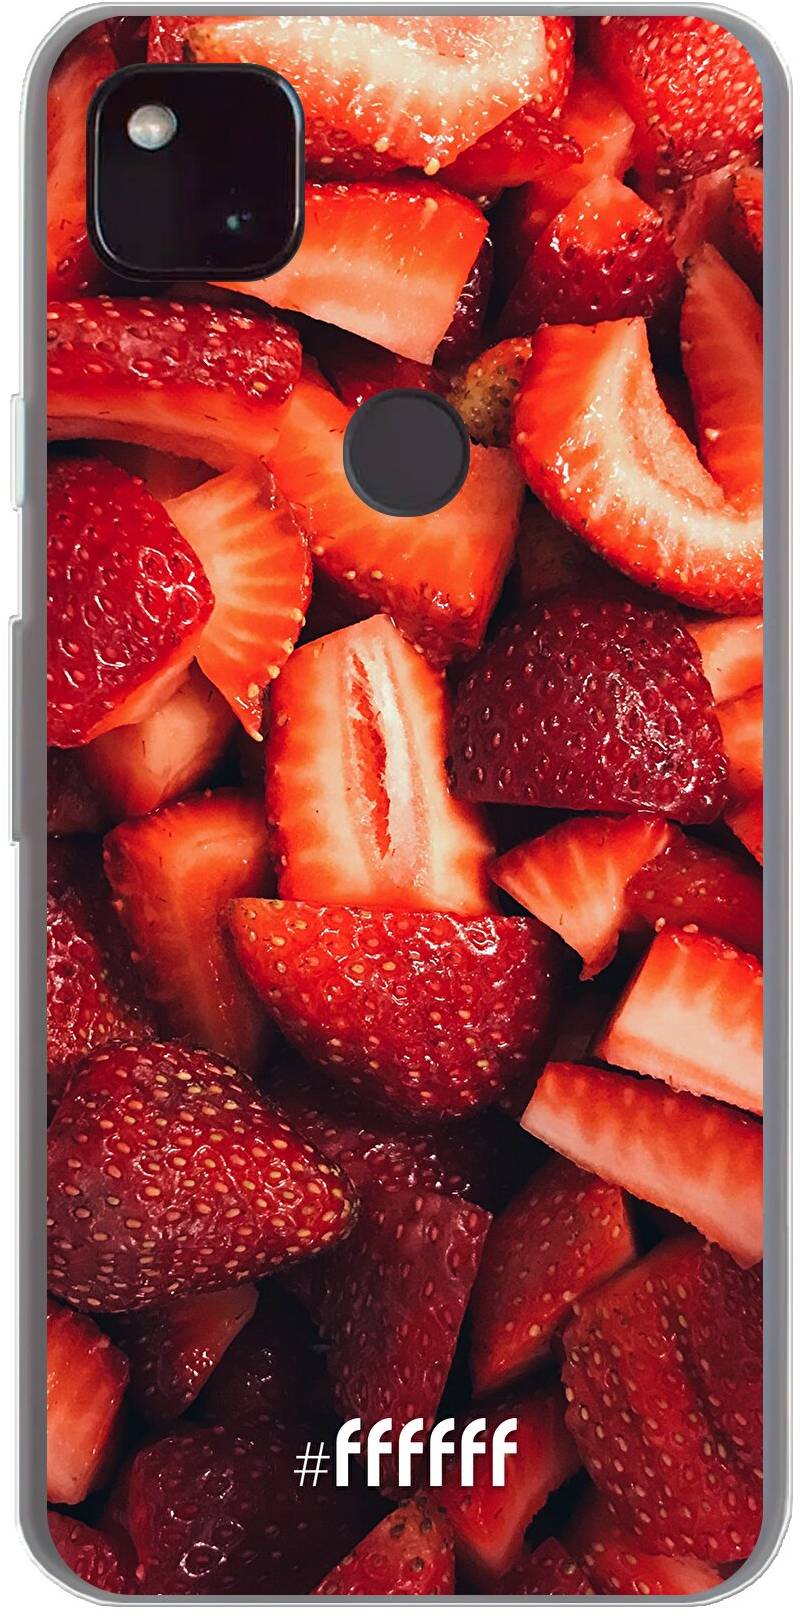 Strawberry Fields Pixel 4a 5G